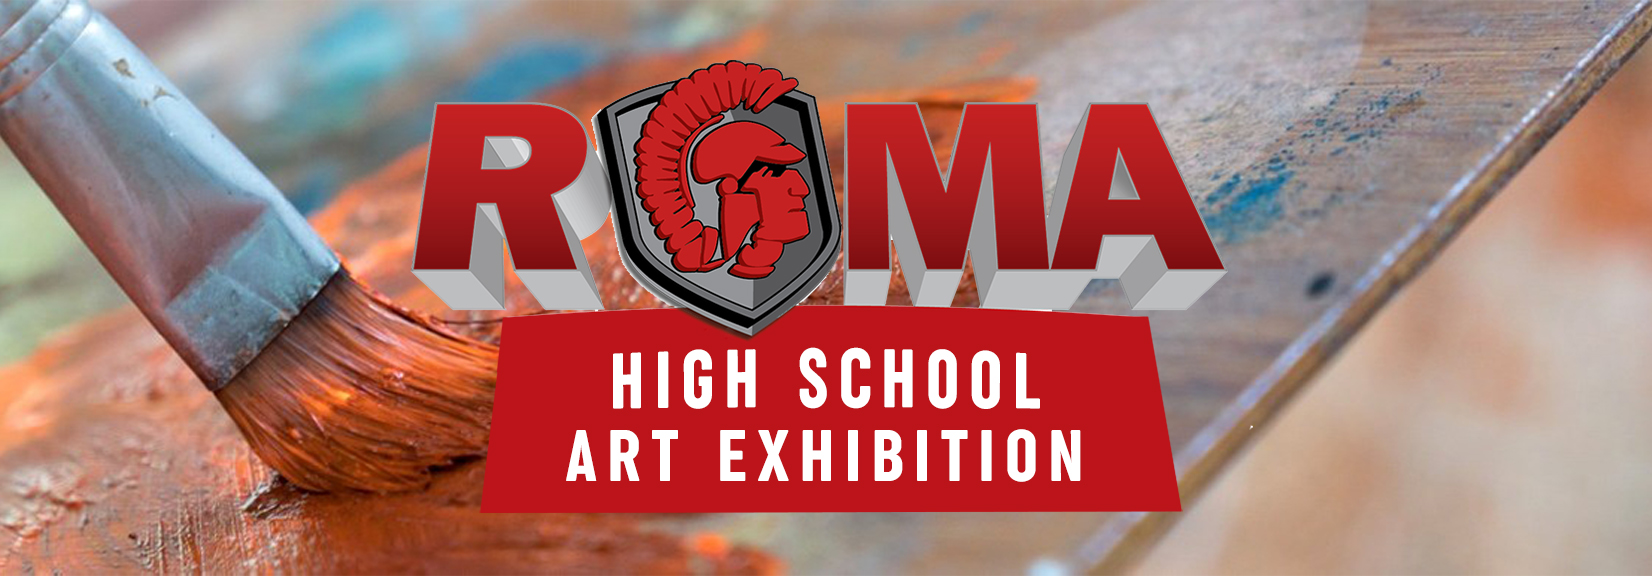 Roma High School Art Exhibition